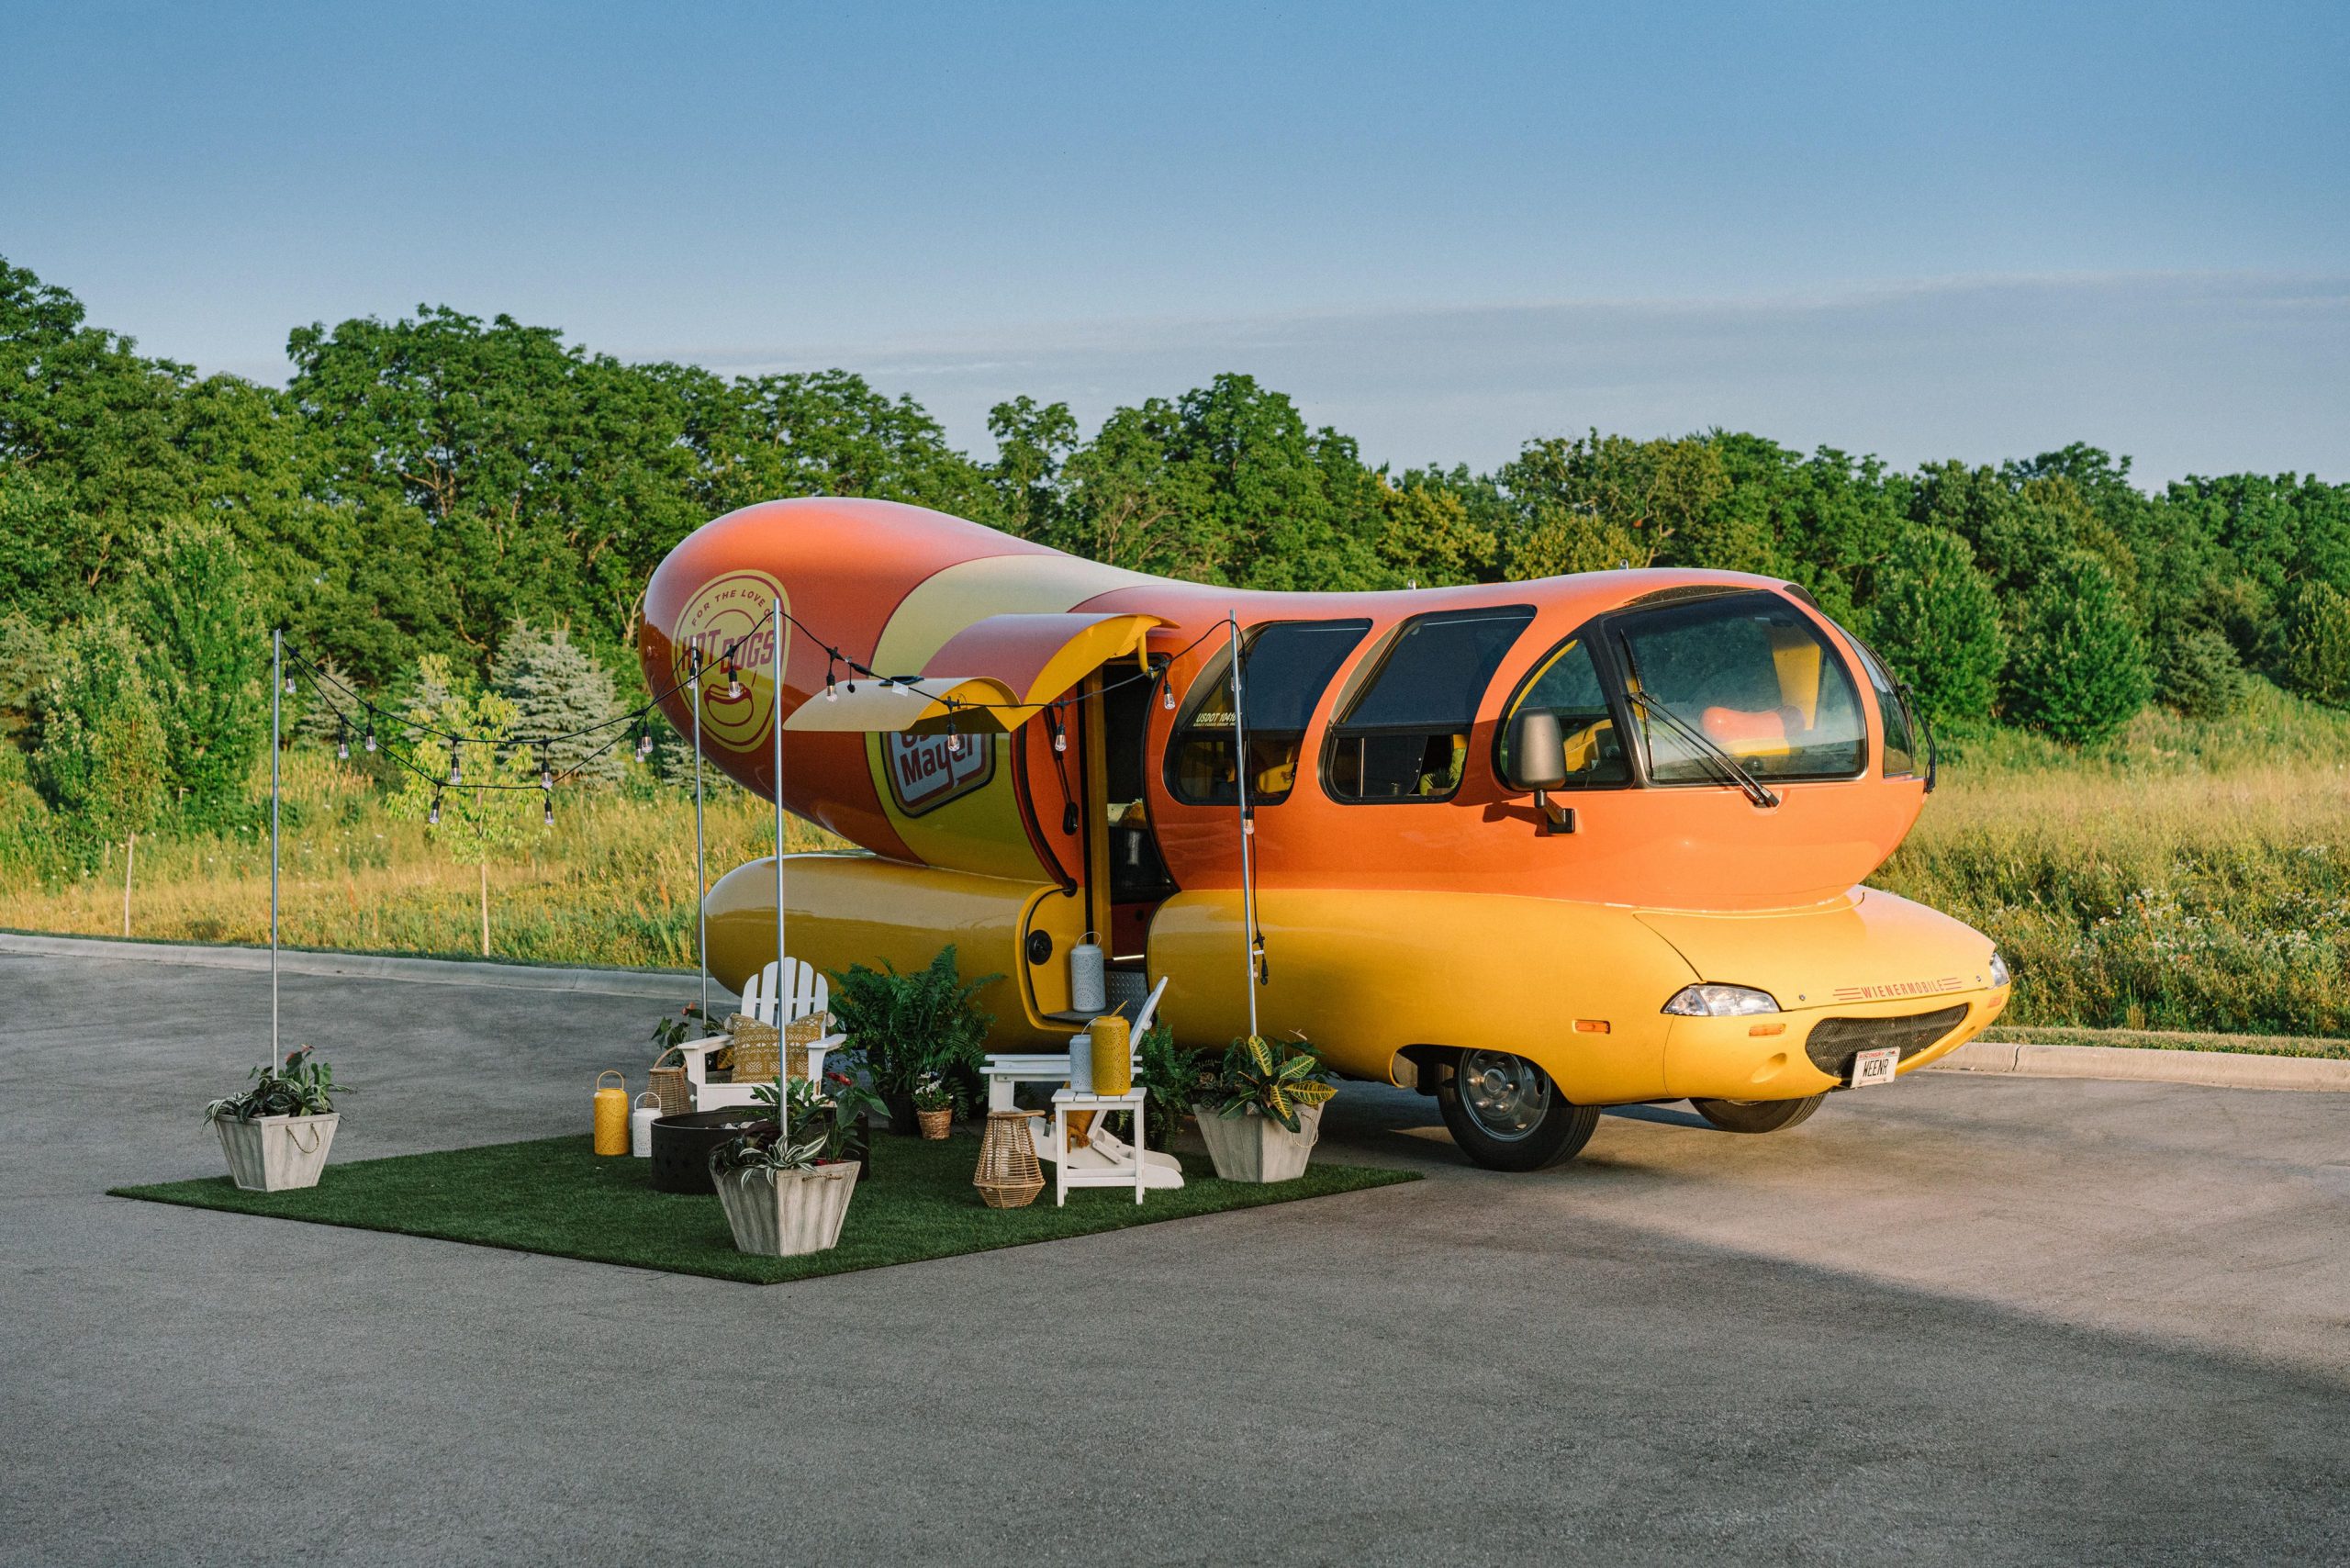 Oscar Mayers Wienermobile Airbnb 1 scaled